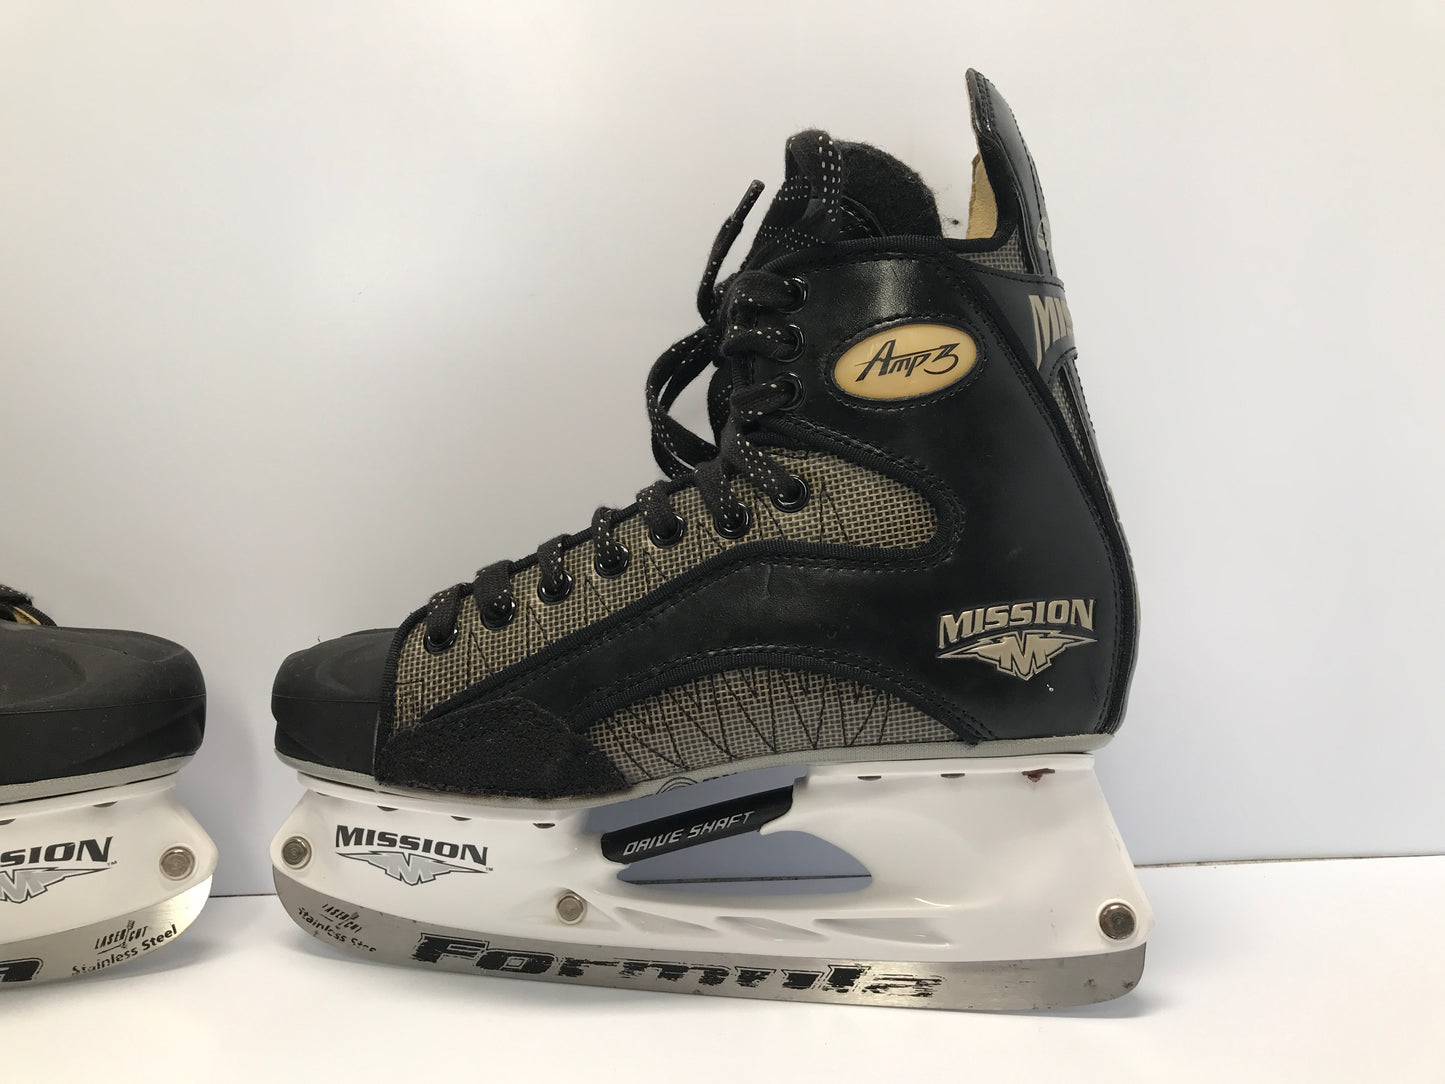 Hockey Skates Men's Senior Size 7.5 Shoe Size 8.5 Mission Amp 3 Excellent